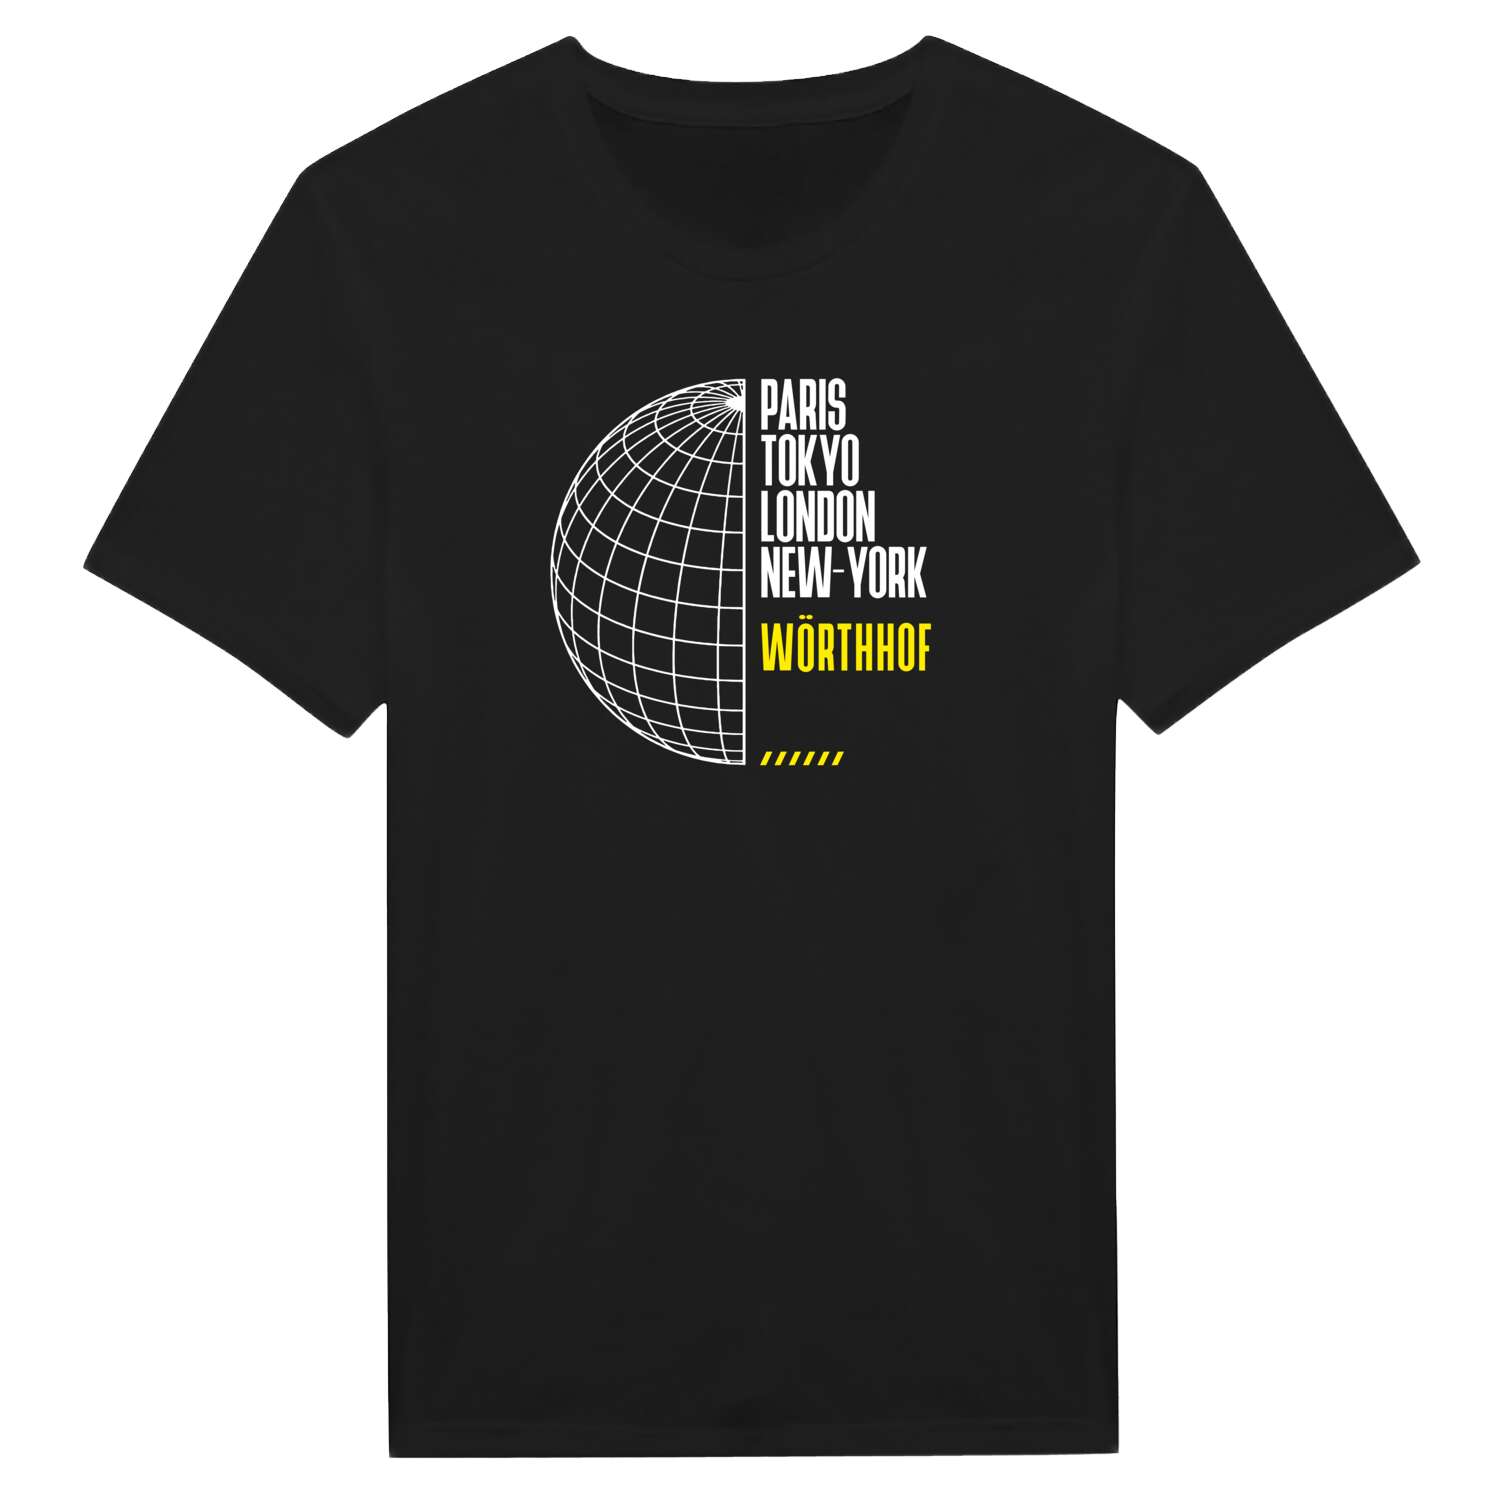 Wörthhof T-Shirt »Paris Tokyo London«